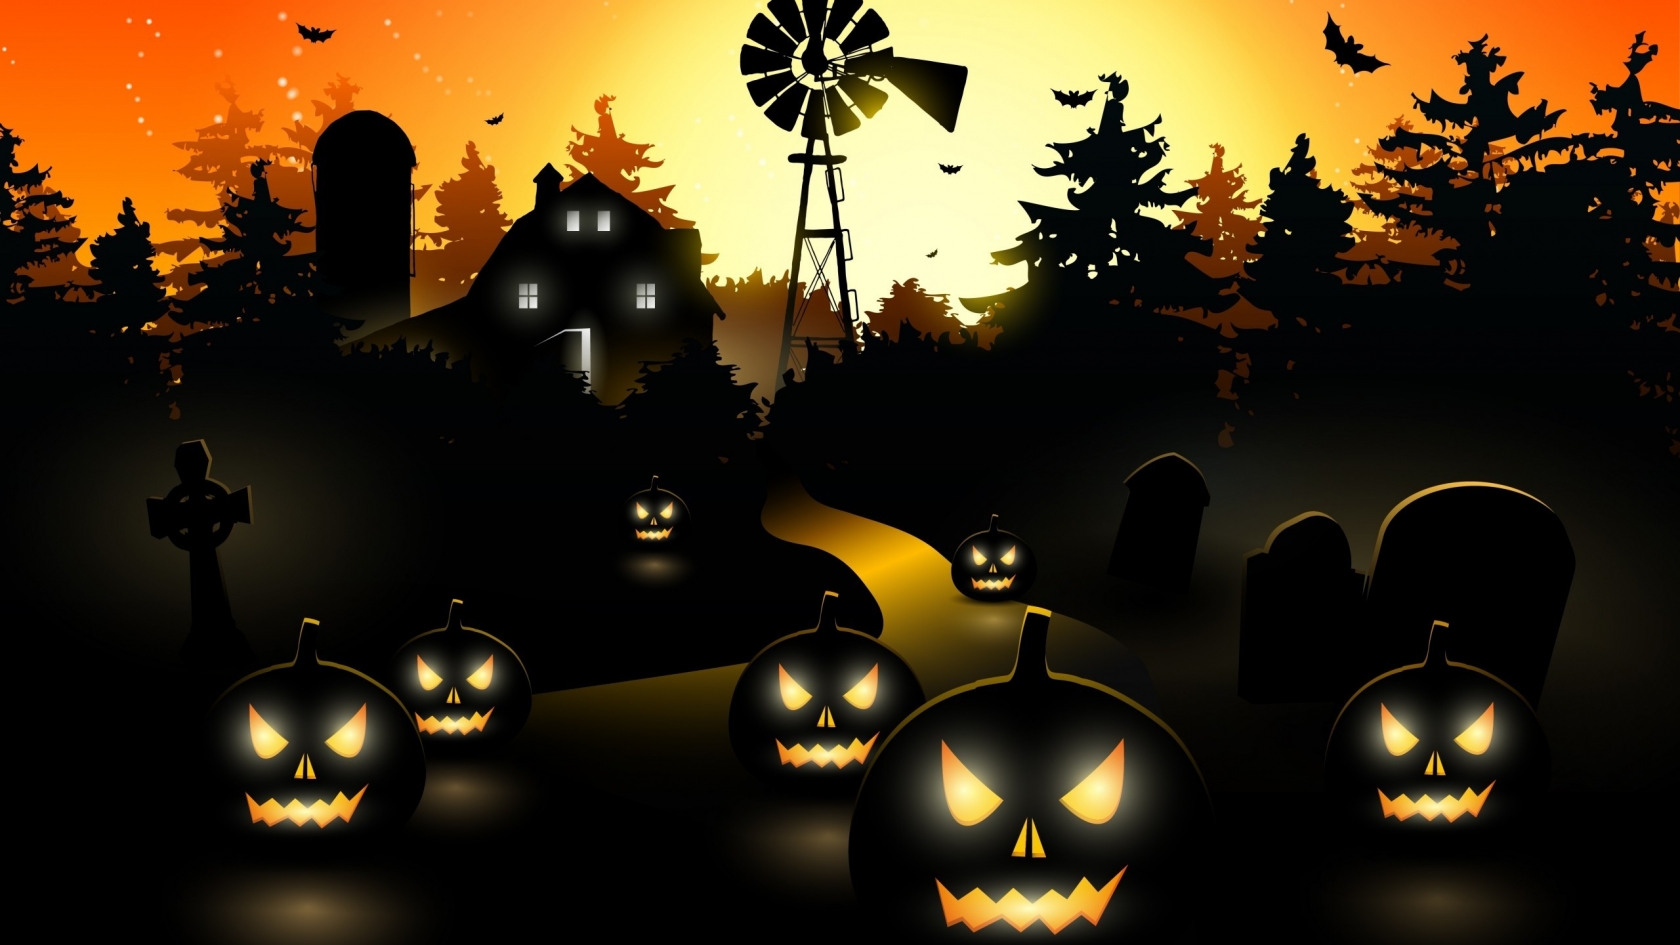 Halloween Black Pumpkins for 1680 x 945 HDTV resolution